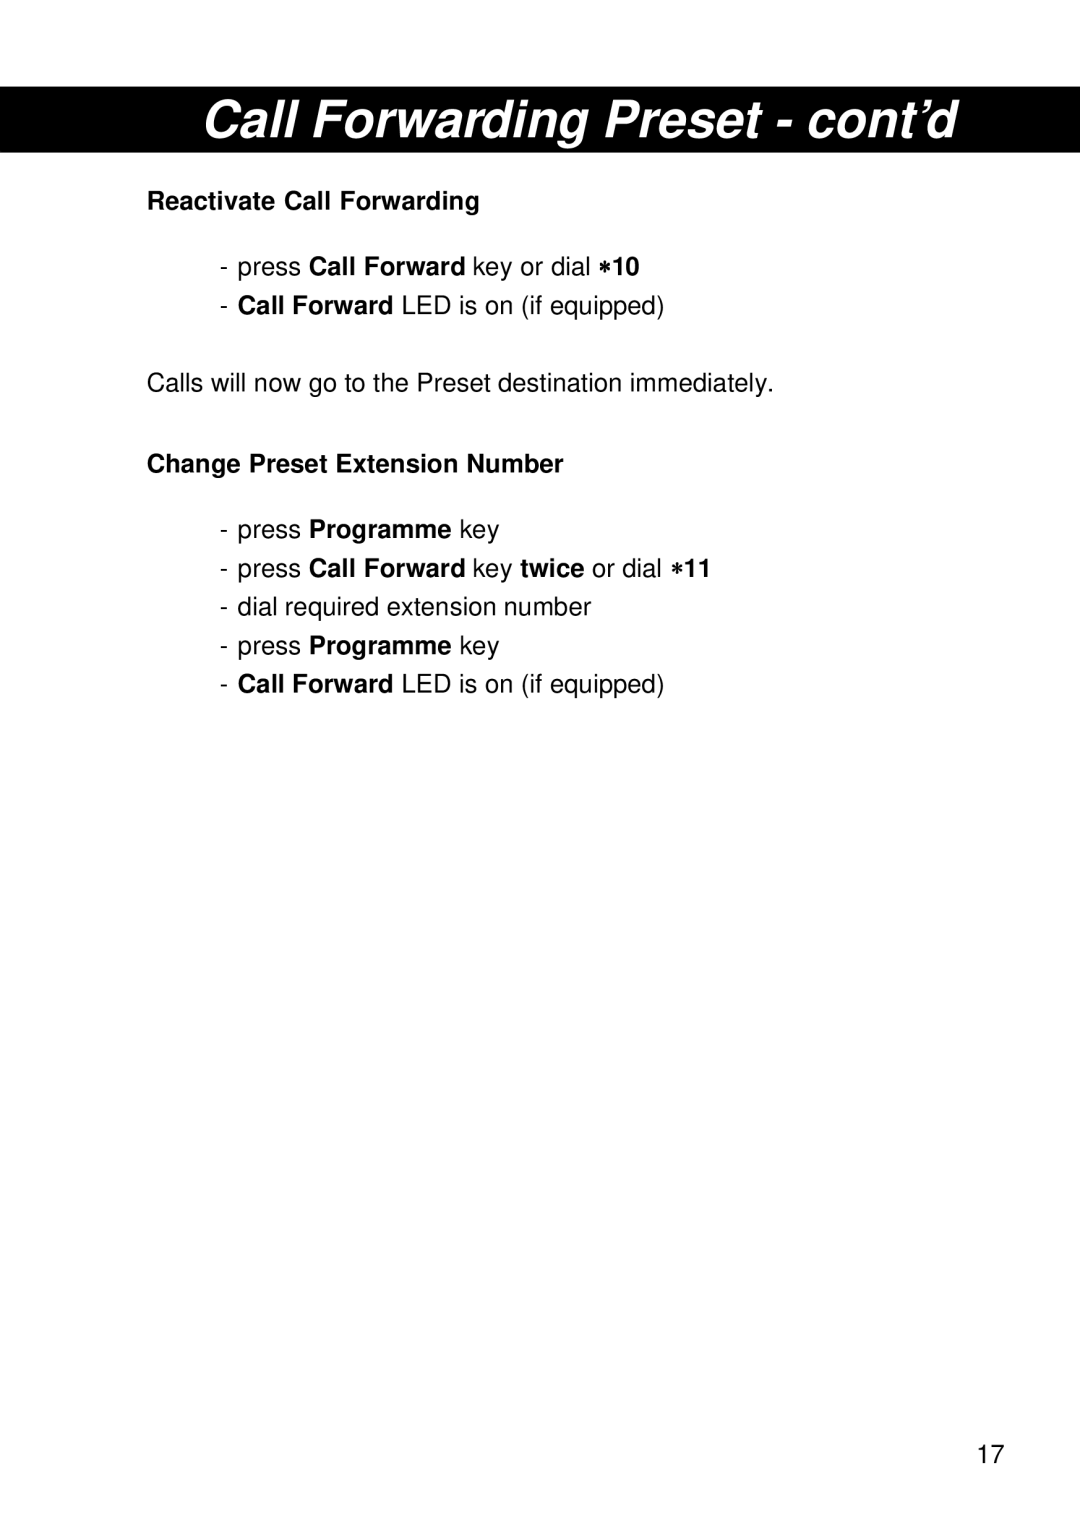 Siemens 300 operating instructions Call Forwarding Preset cont’d, Reactivate Call Forwarding 